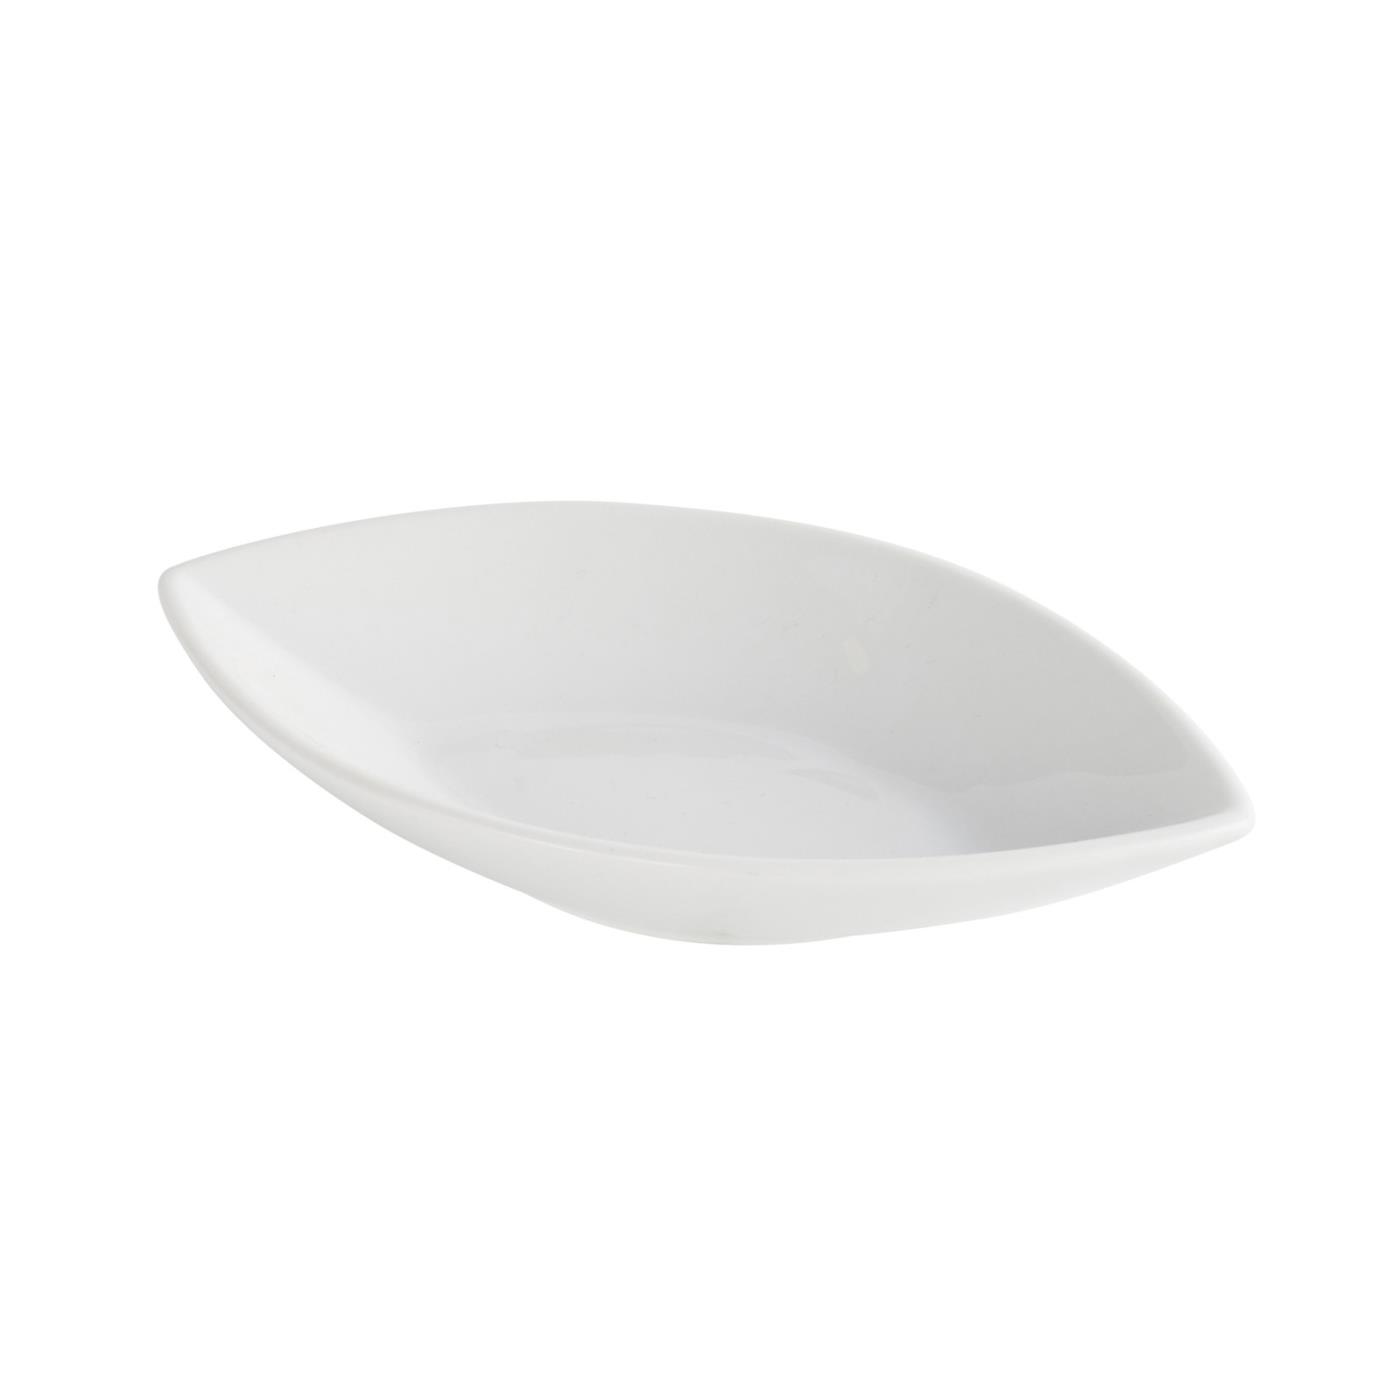 Ceramic Oval Point Tip Tasting Dish - Tasting Dish 6.5"